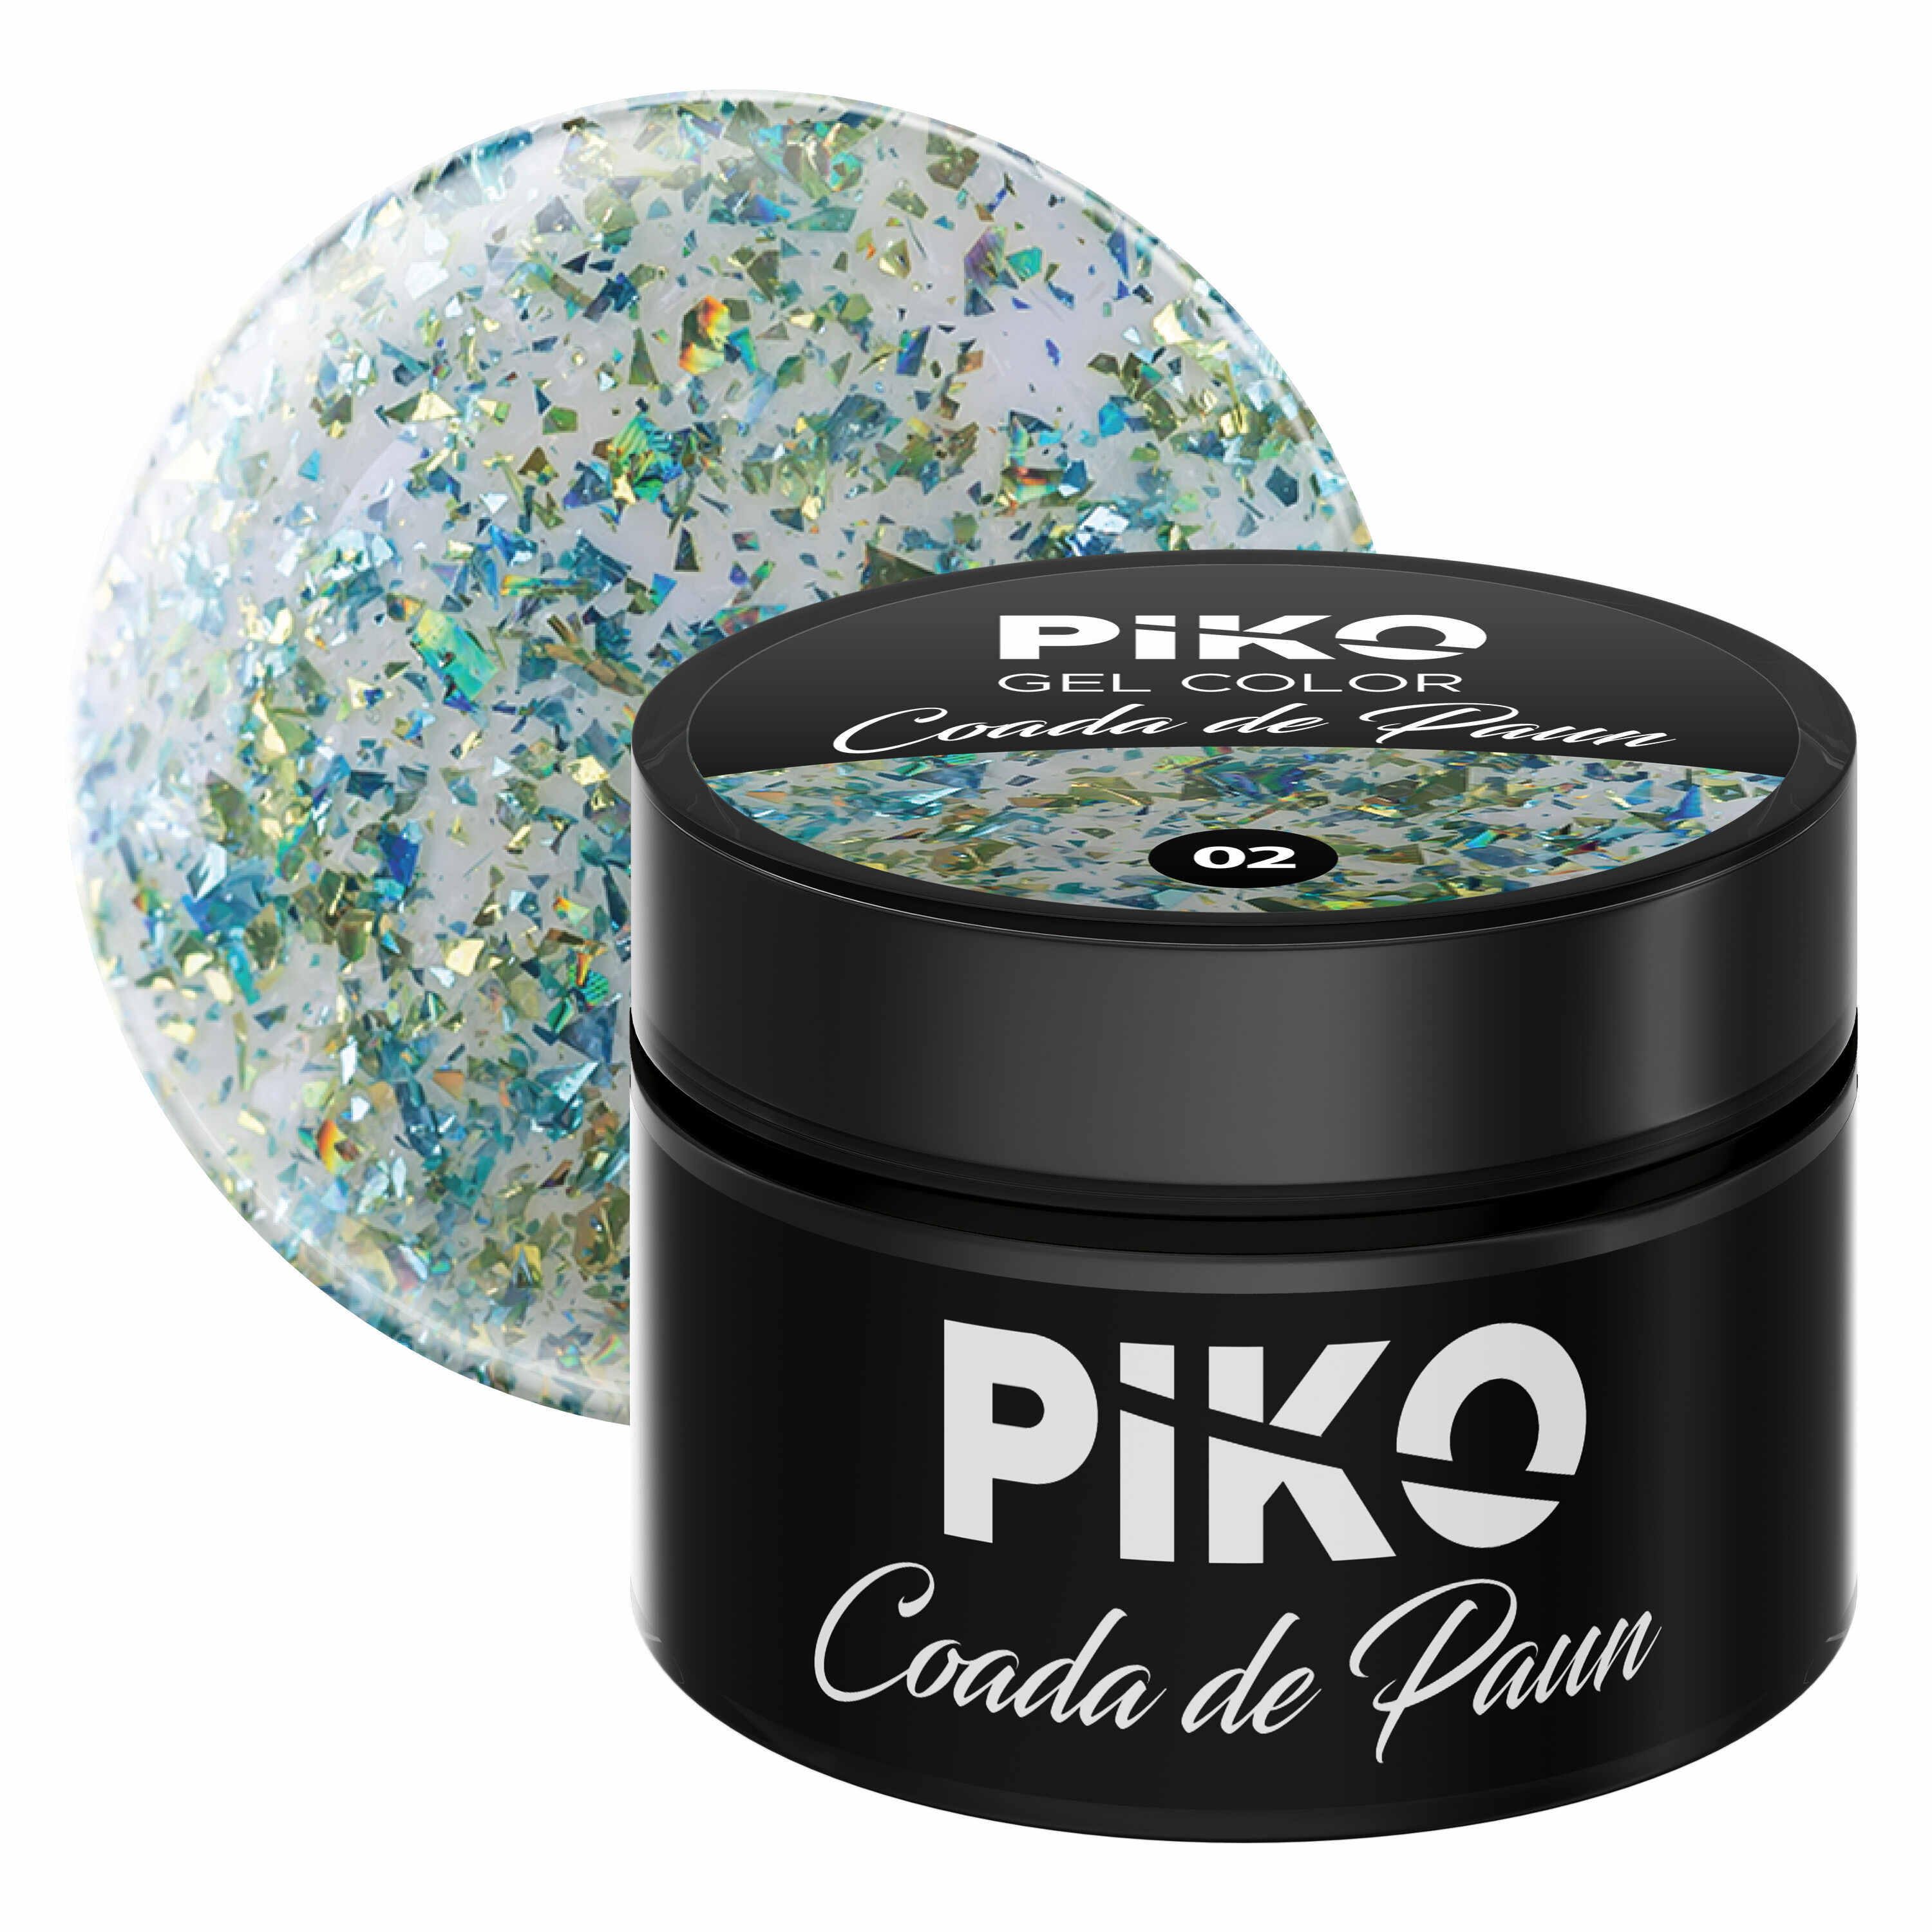 Gel UV color Piko, Coada de paun, 5g, model 02